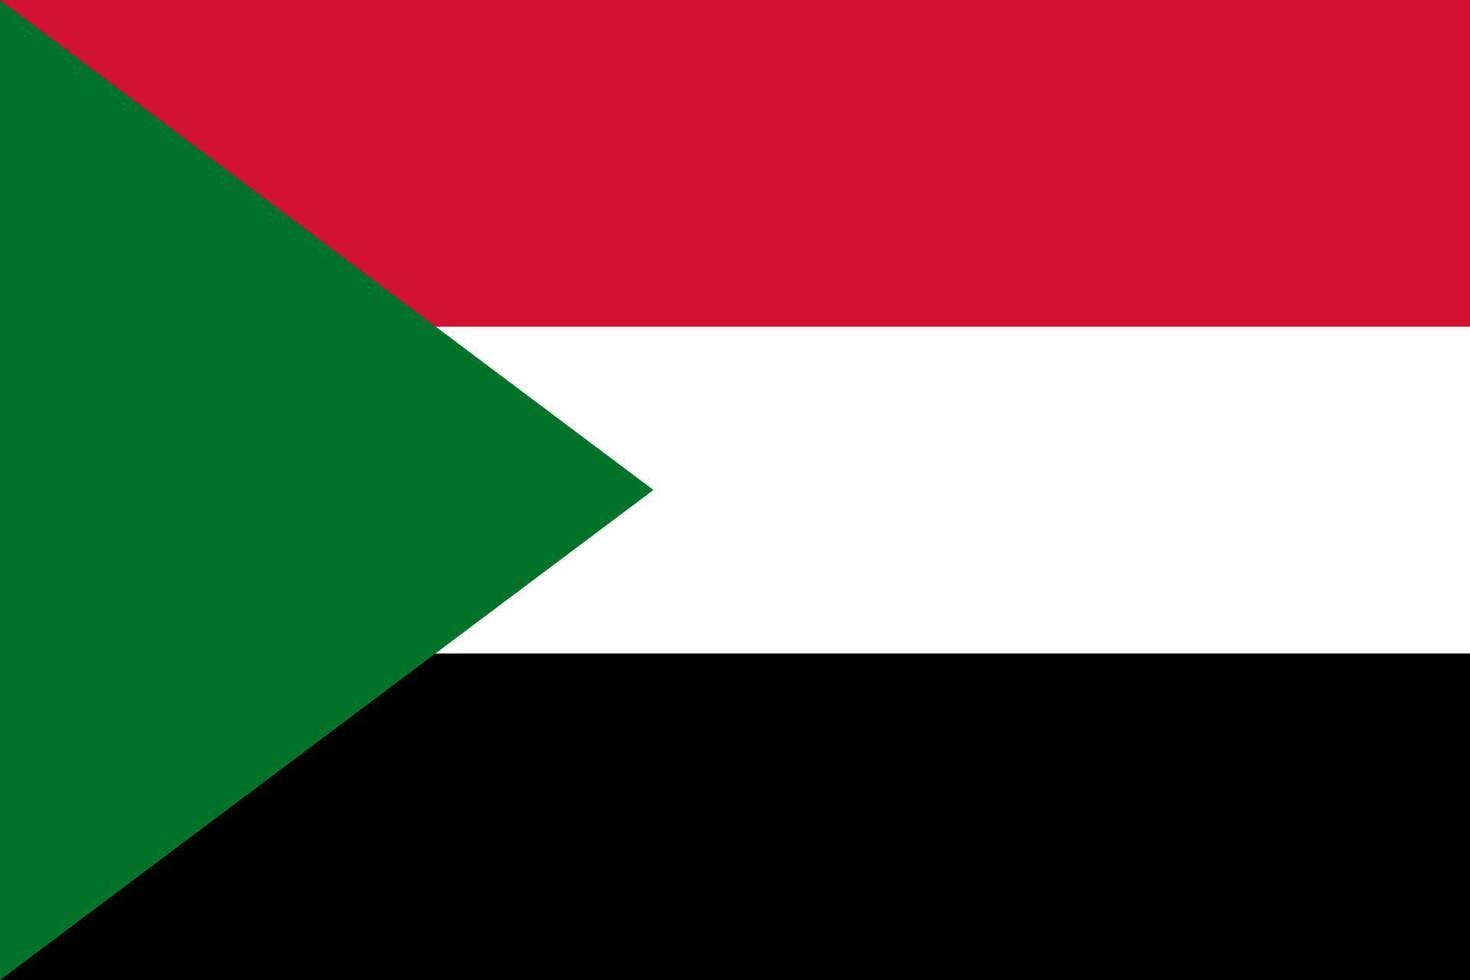 Soedan vlag. illustratie van Soedan vlag vector in vlak stijl voor web en digitaal, republiek van Soedan nationaal kleding stof vlag, textiel achtergrond. symbool van Internationale wereld Afrikaanse land.